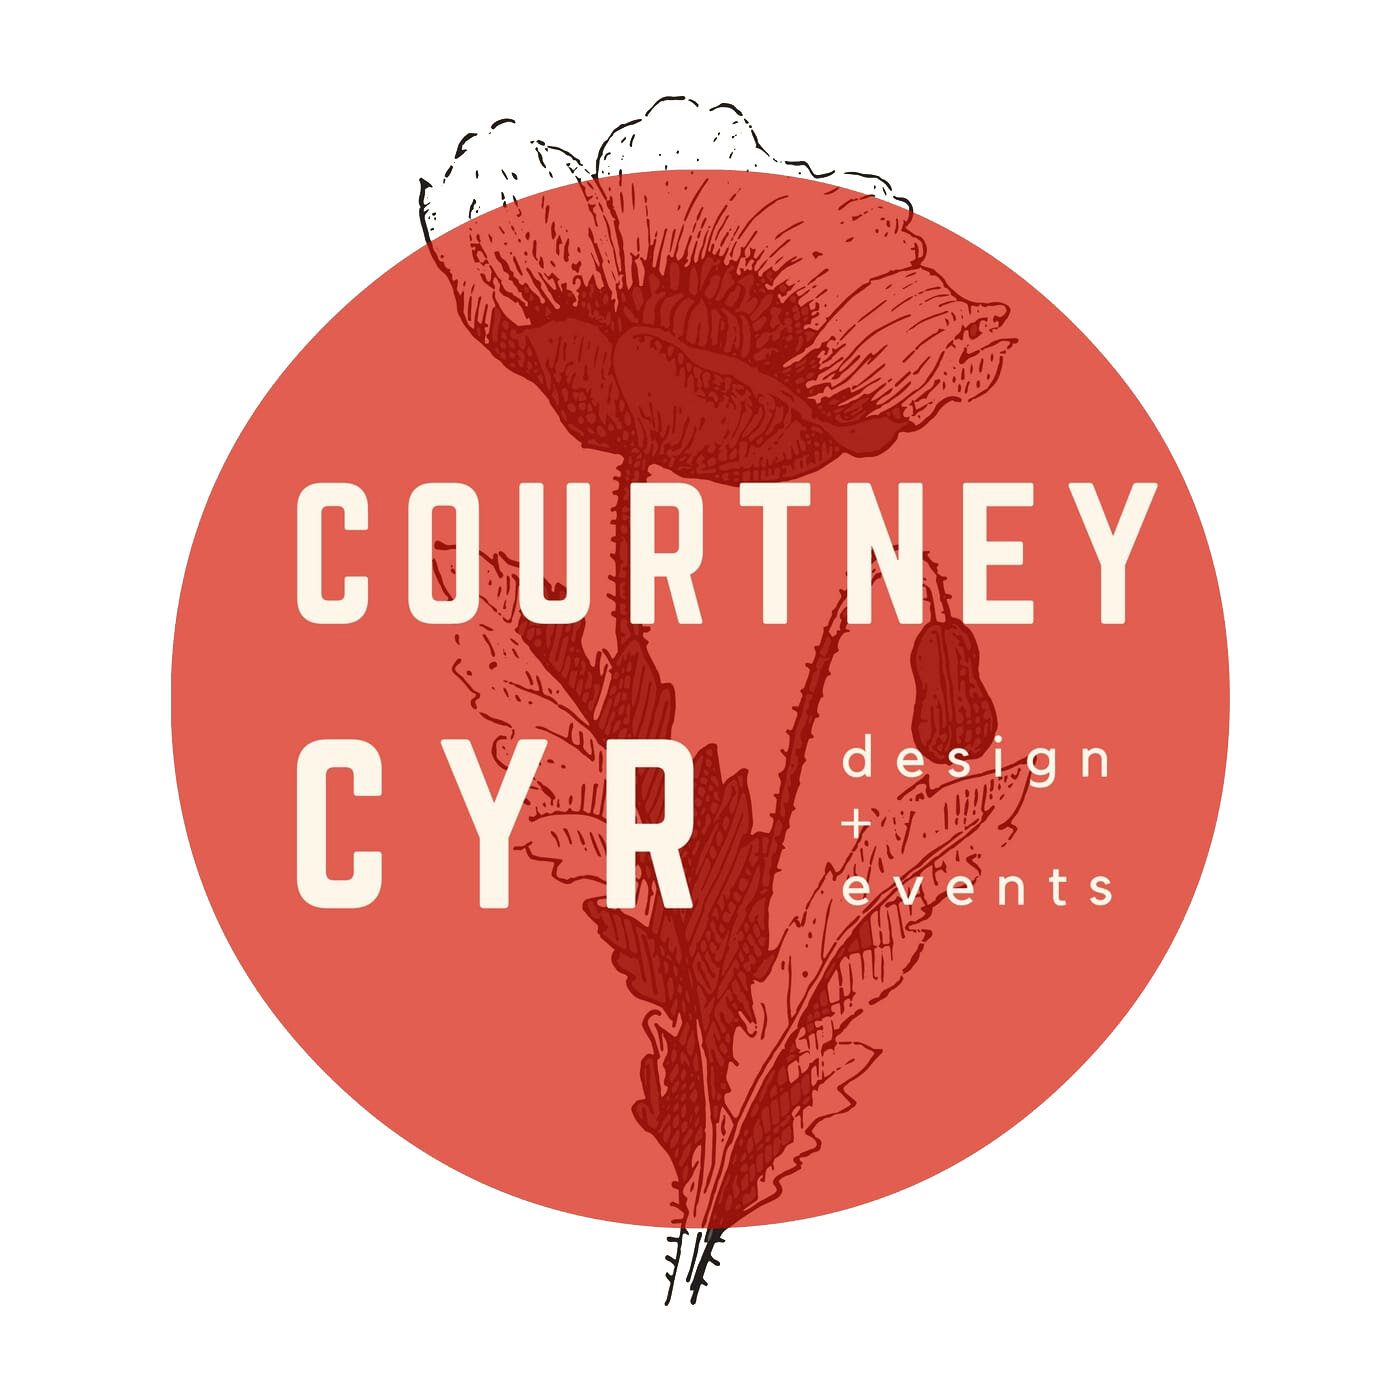 CourtneyCyrDesign+Events.jpg